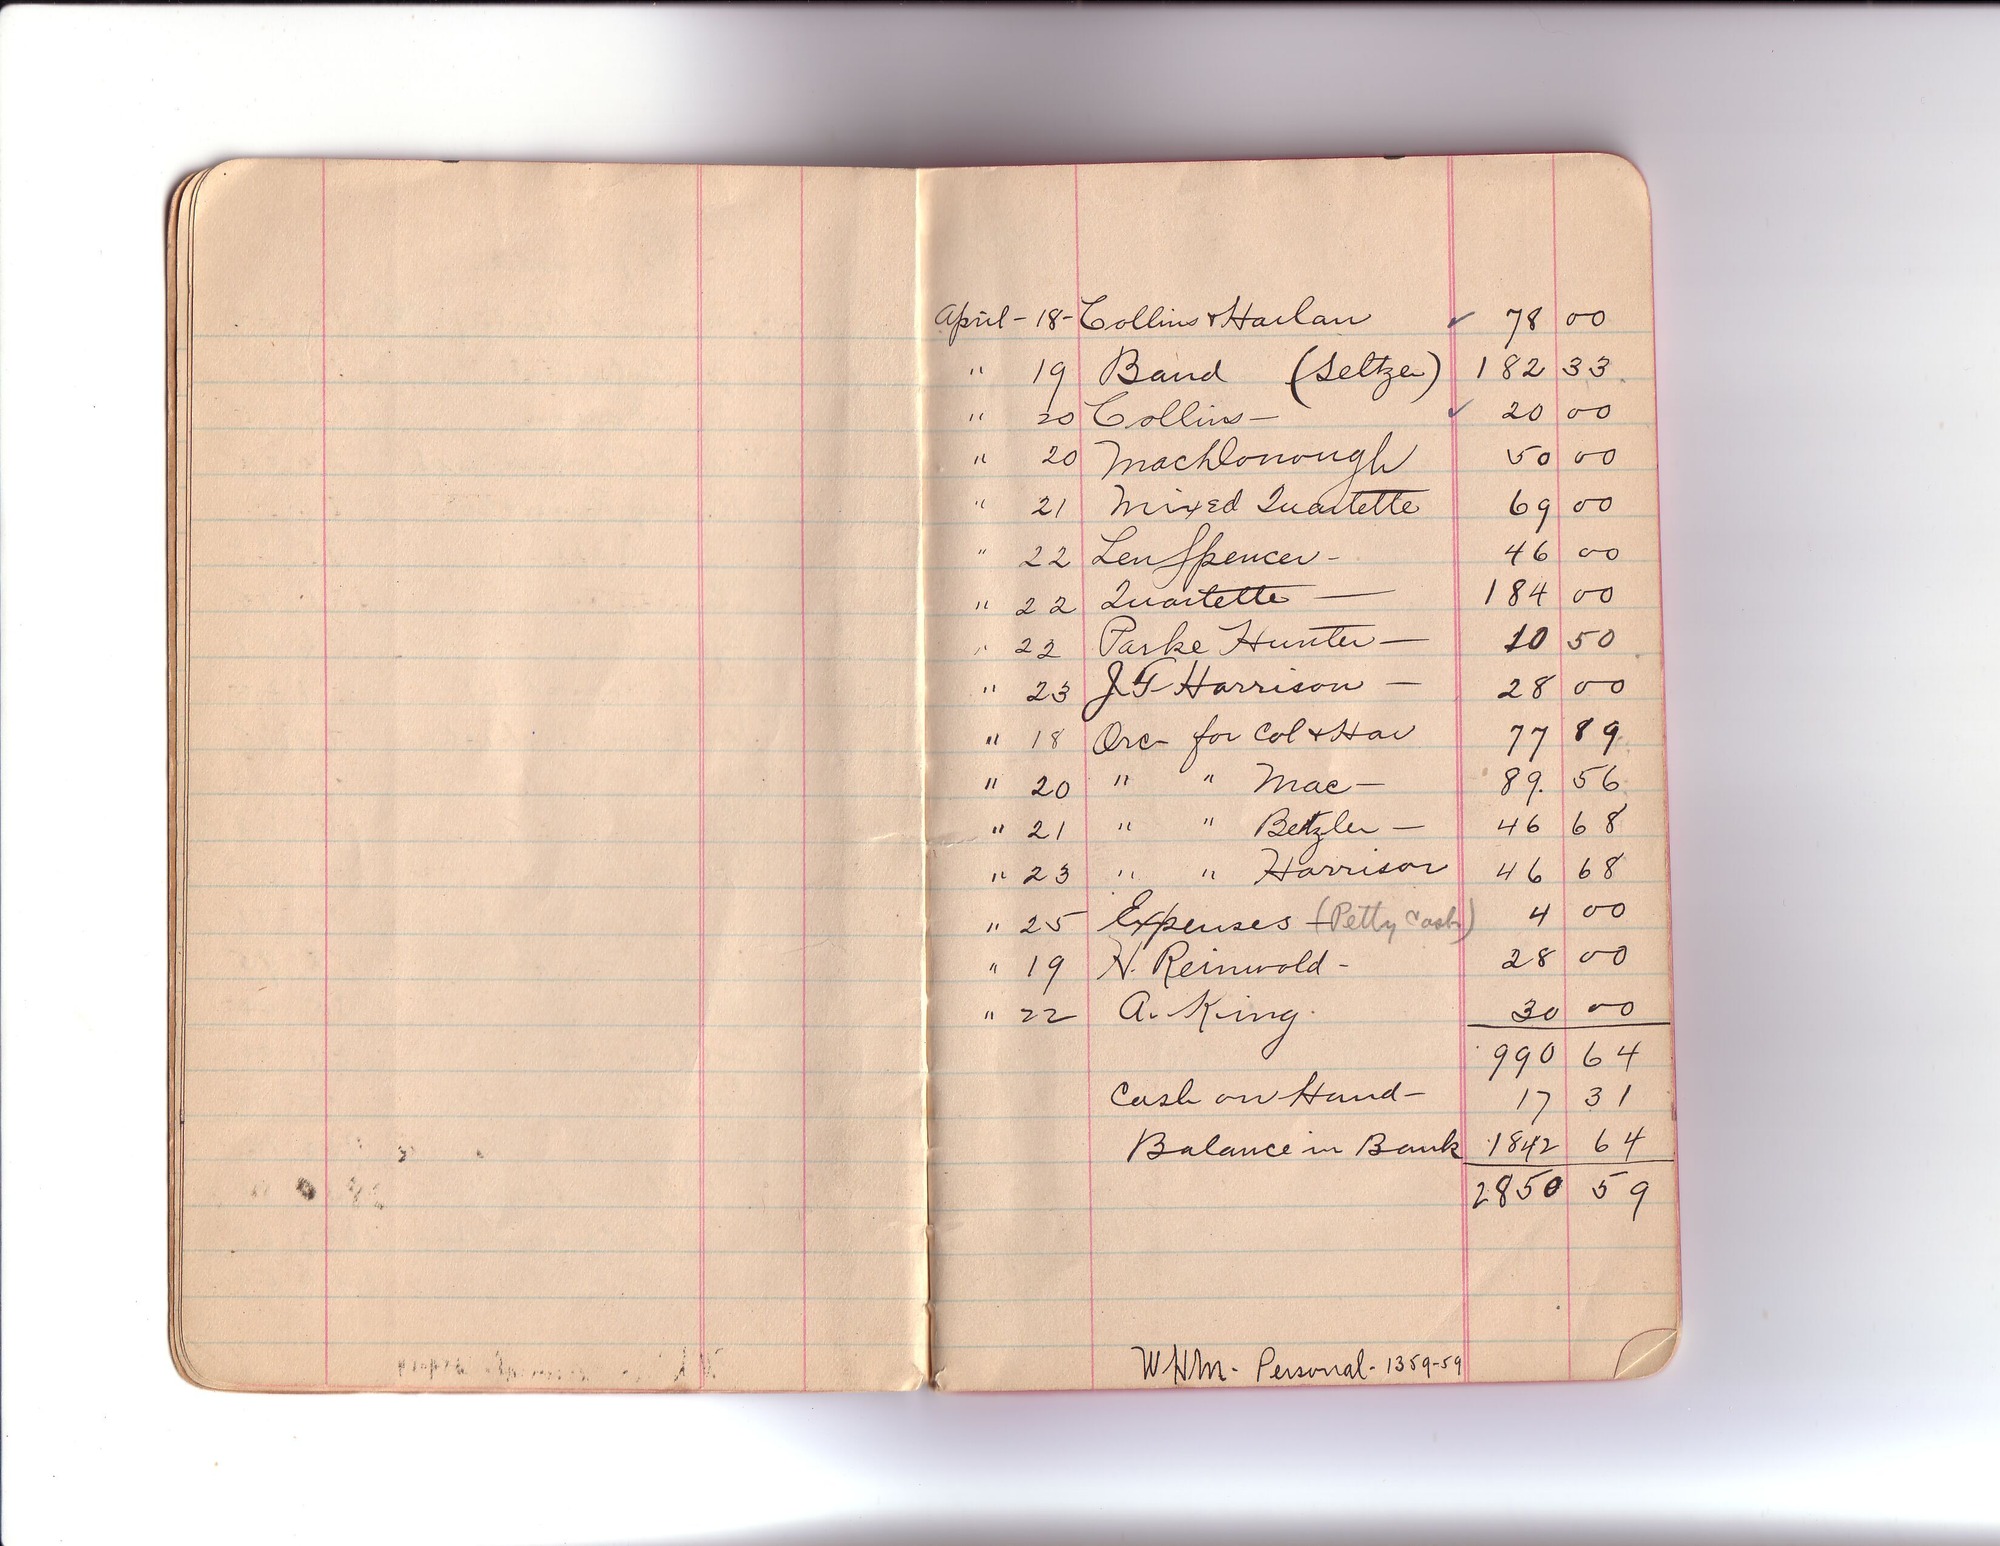 Thomas Edison's New York City Recording Studio Cash Book 01 (of 21), Image 05 (of 41).